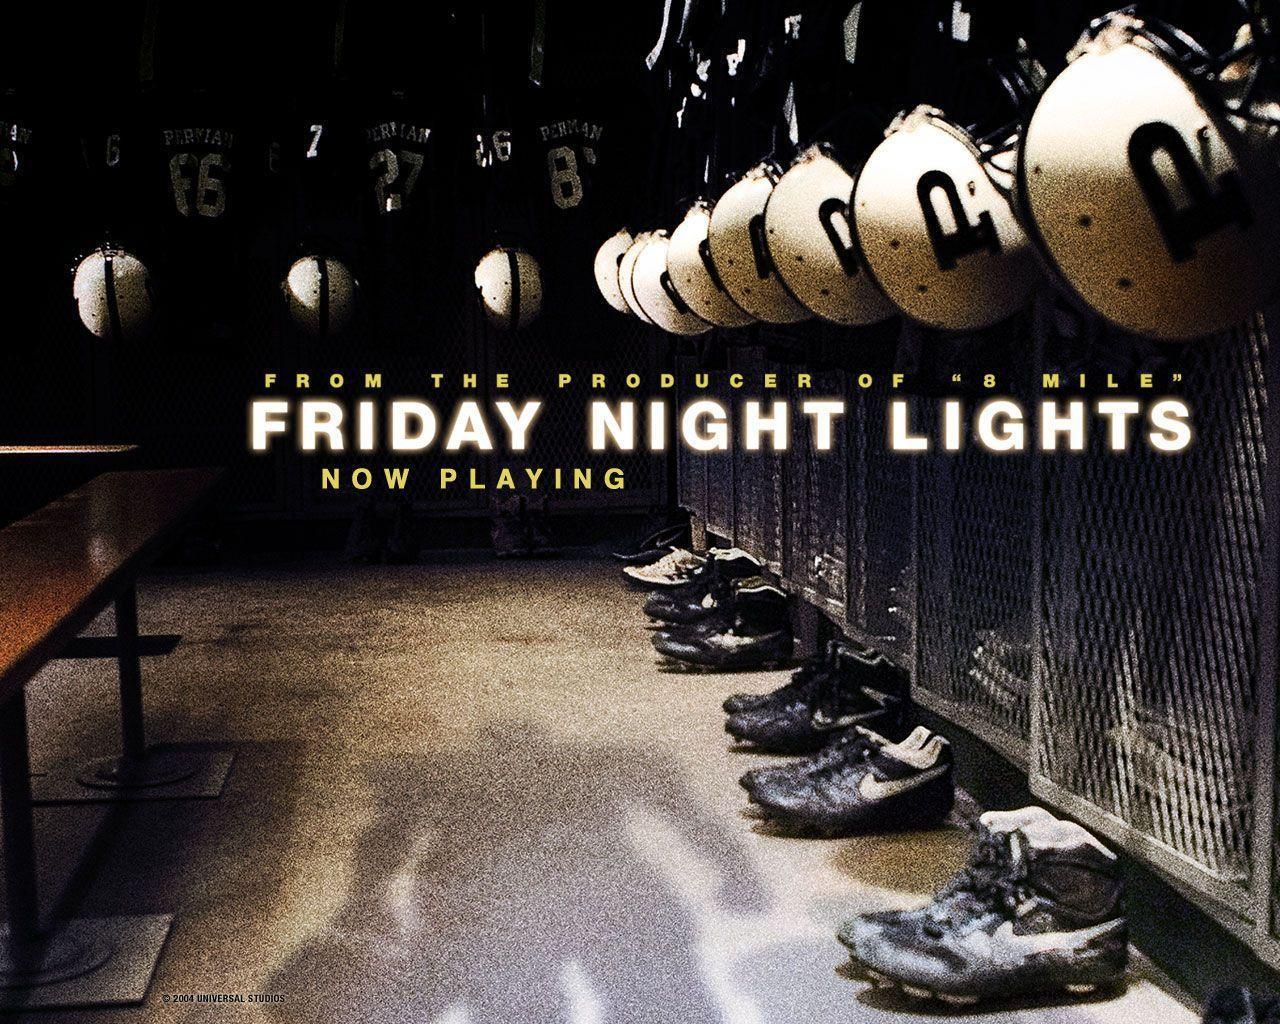 Friday Night Lights on DVD. Trailers, bonus features, cast photo